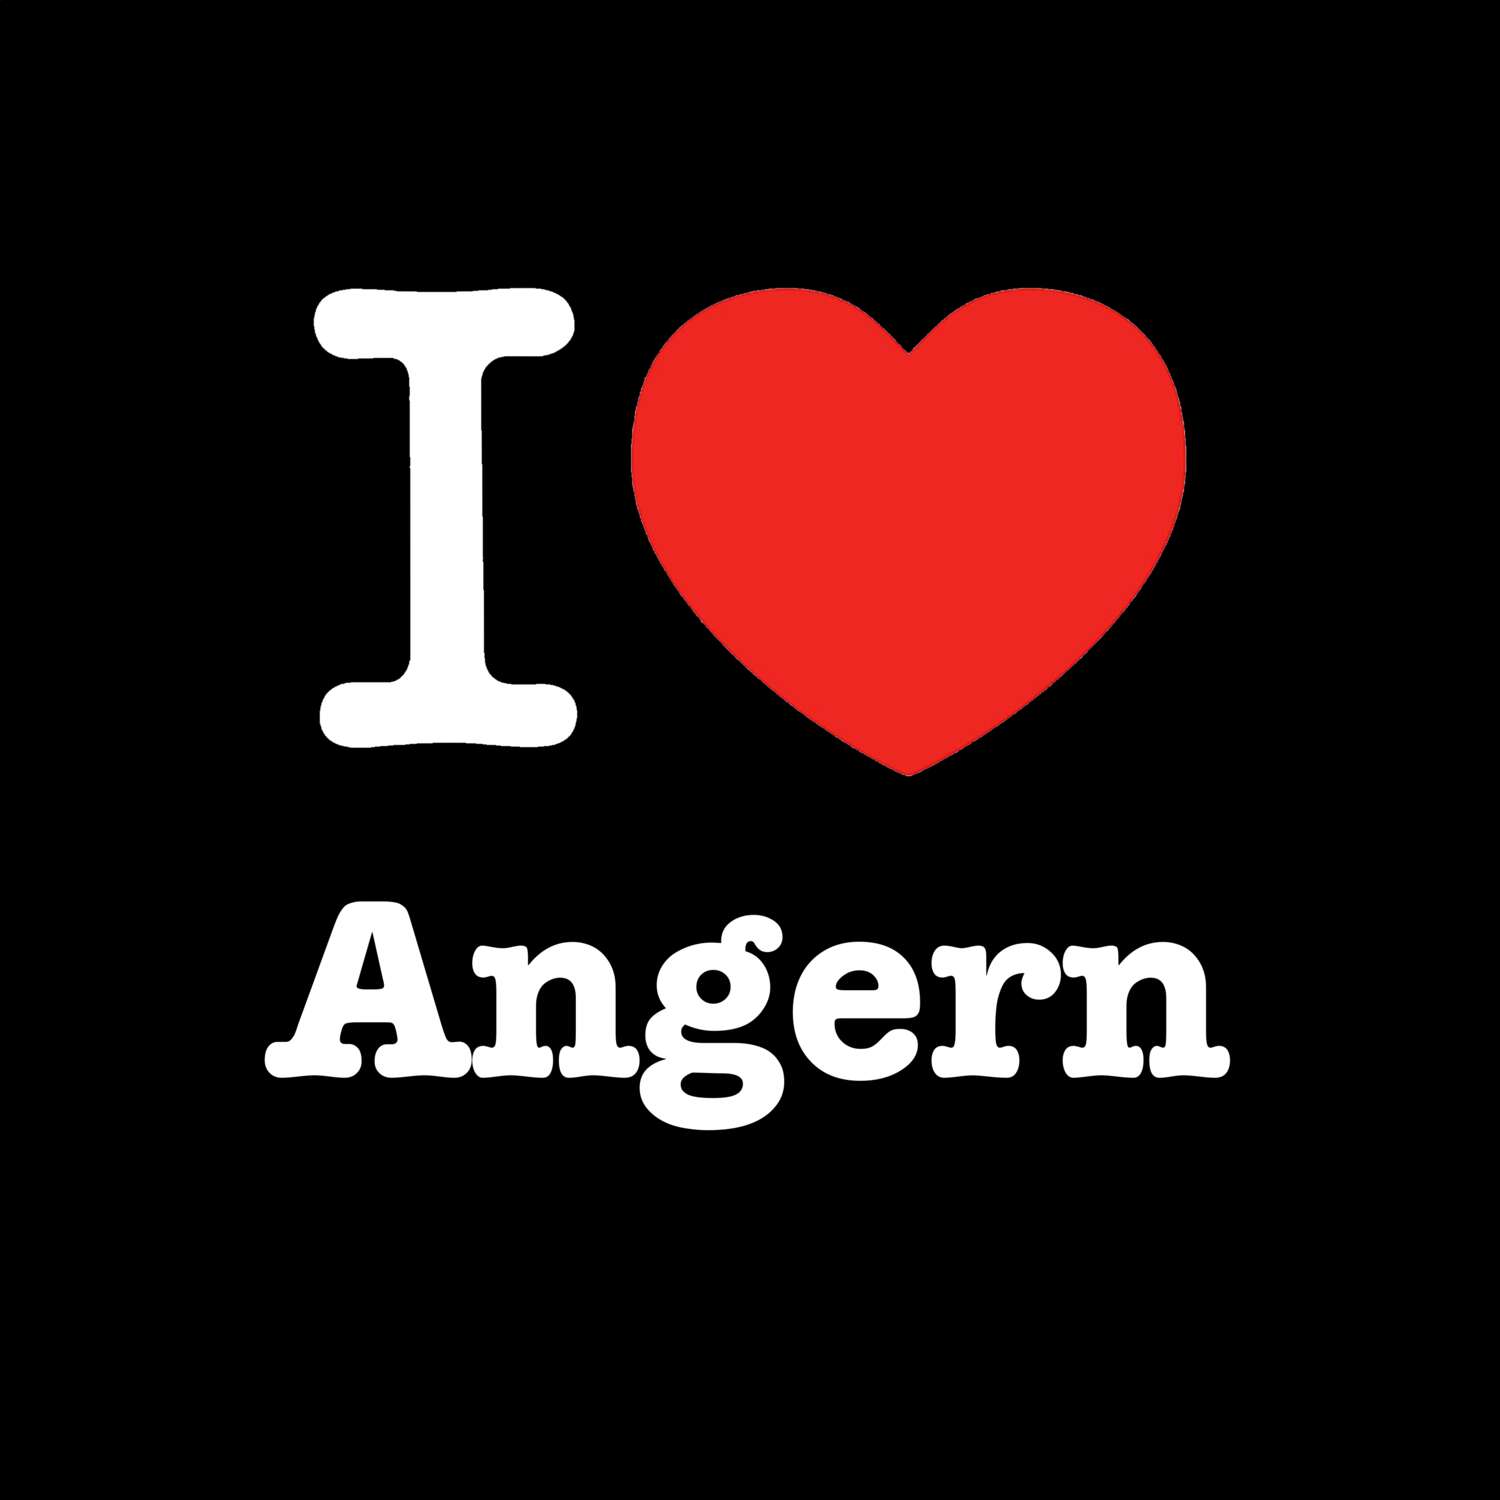 Angern T-Shirt »I love«